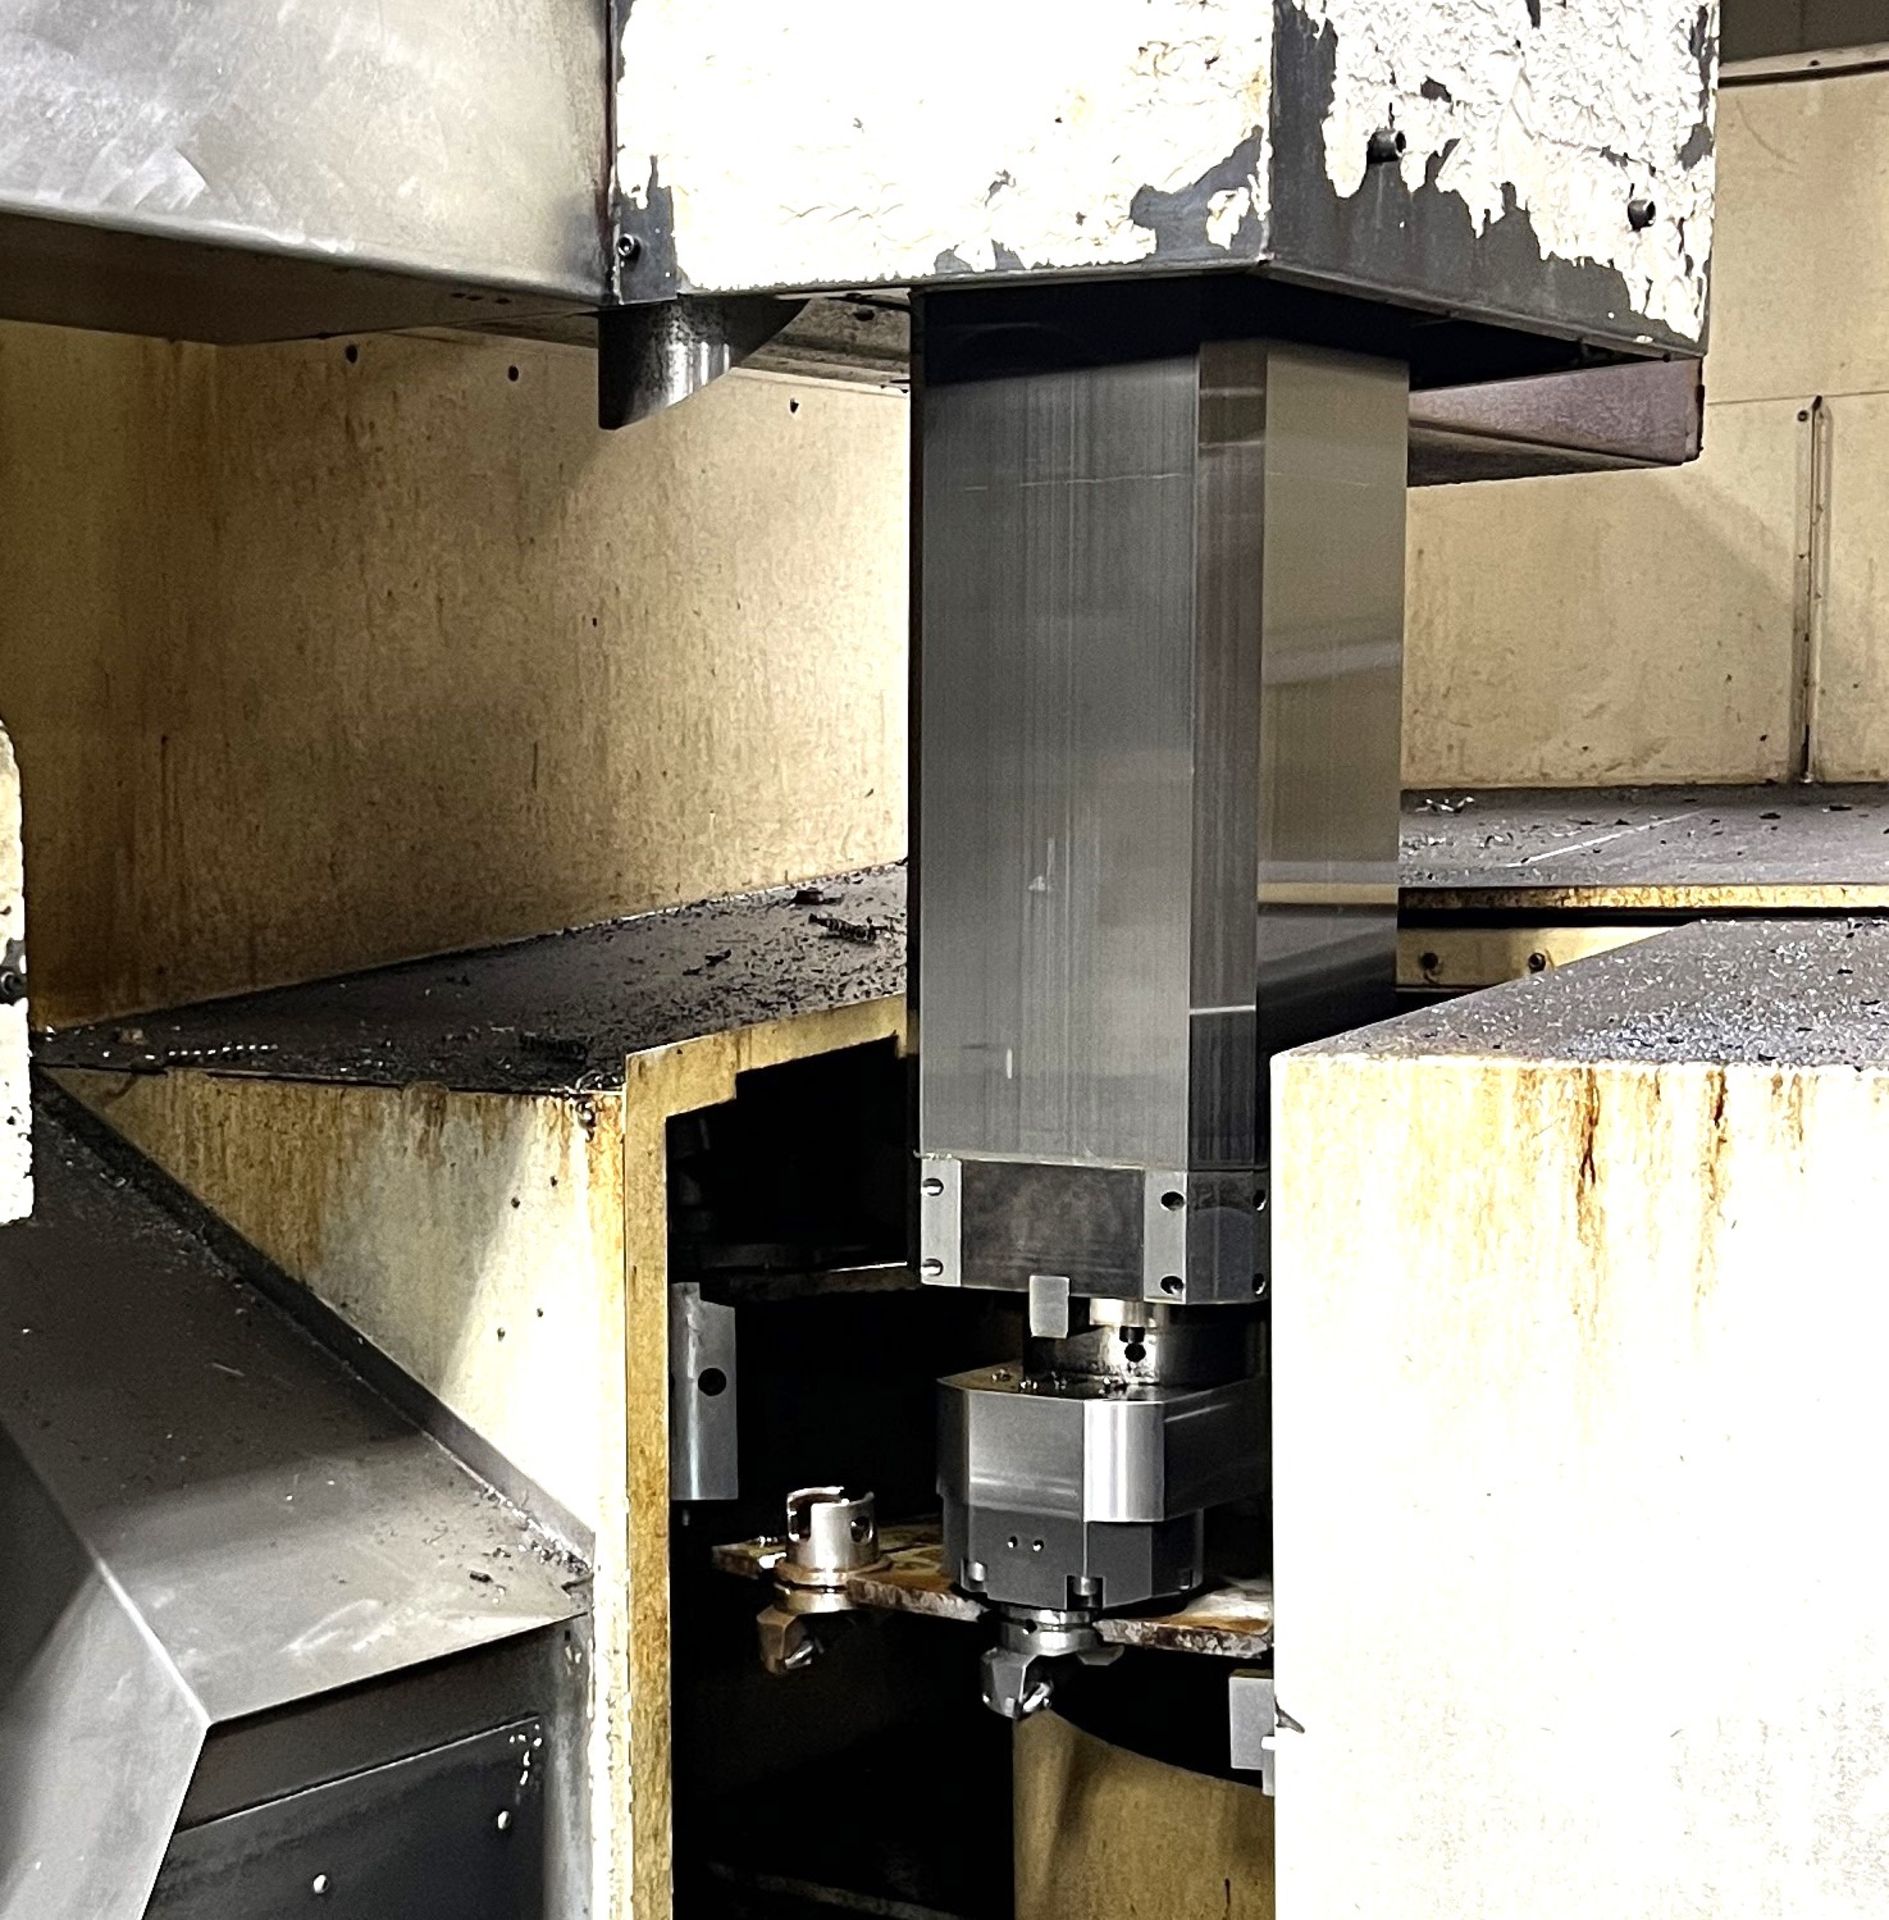 Giddings & Lewis VTC1600 CNC Vertical Boring Mill - Image 5 of 10